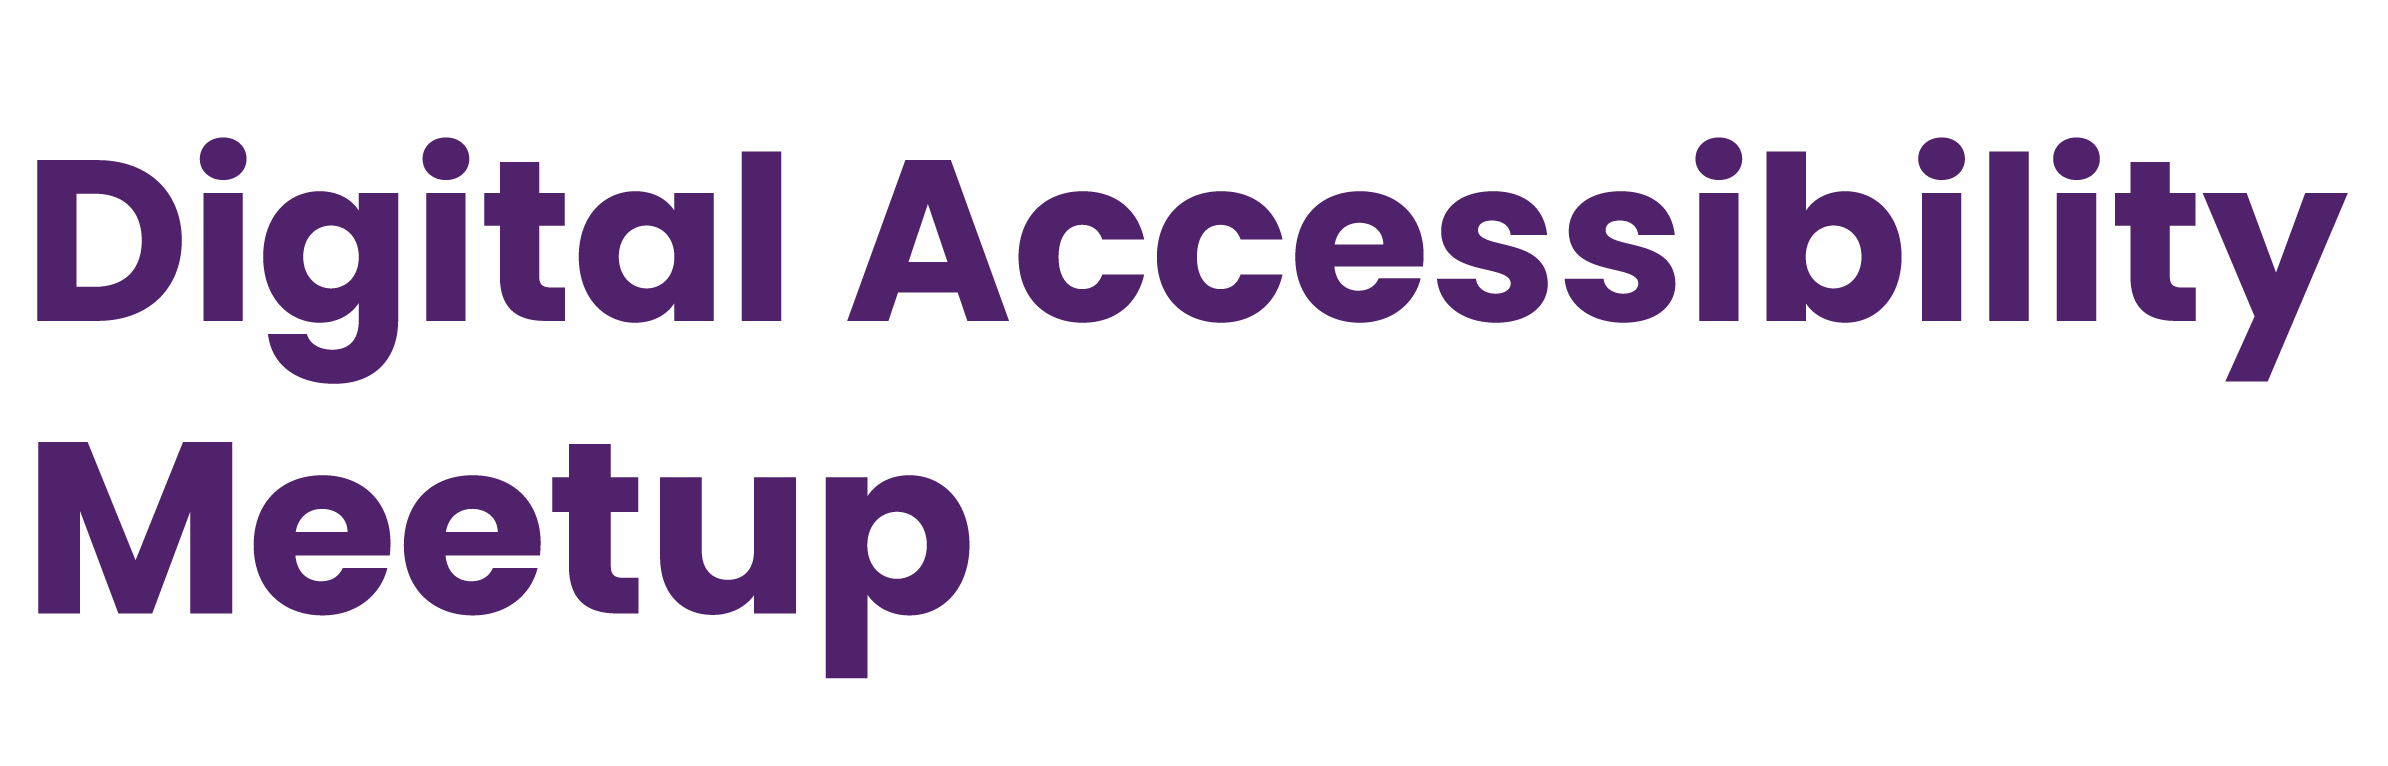 Digital Accessibility meetup logo